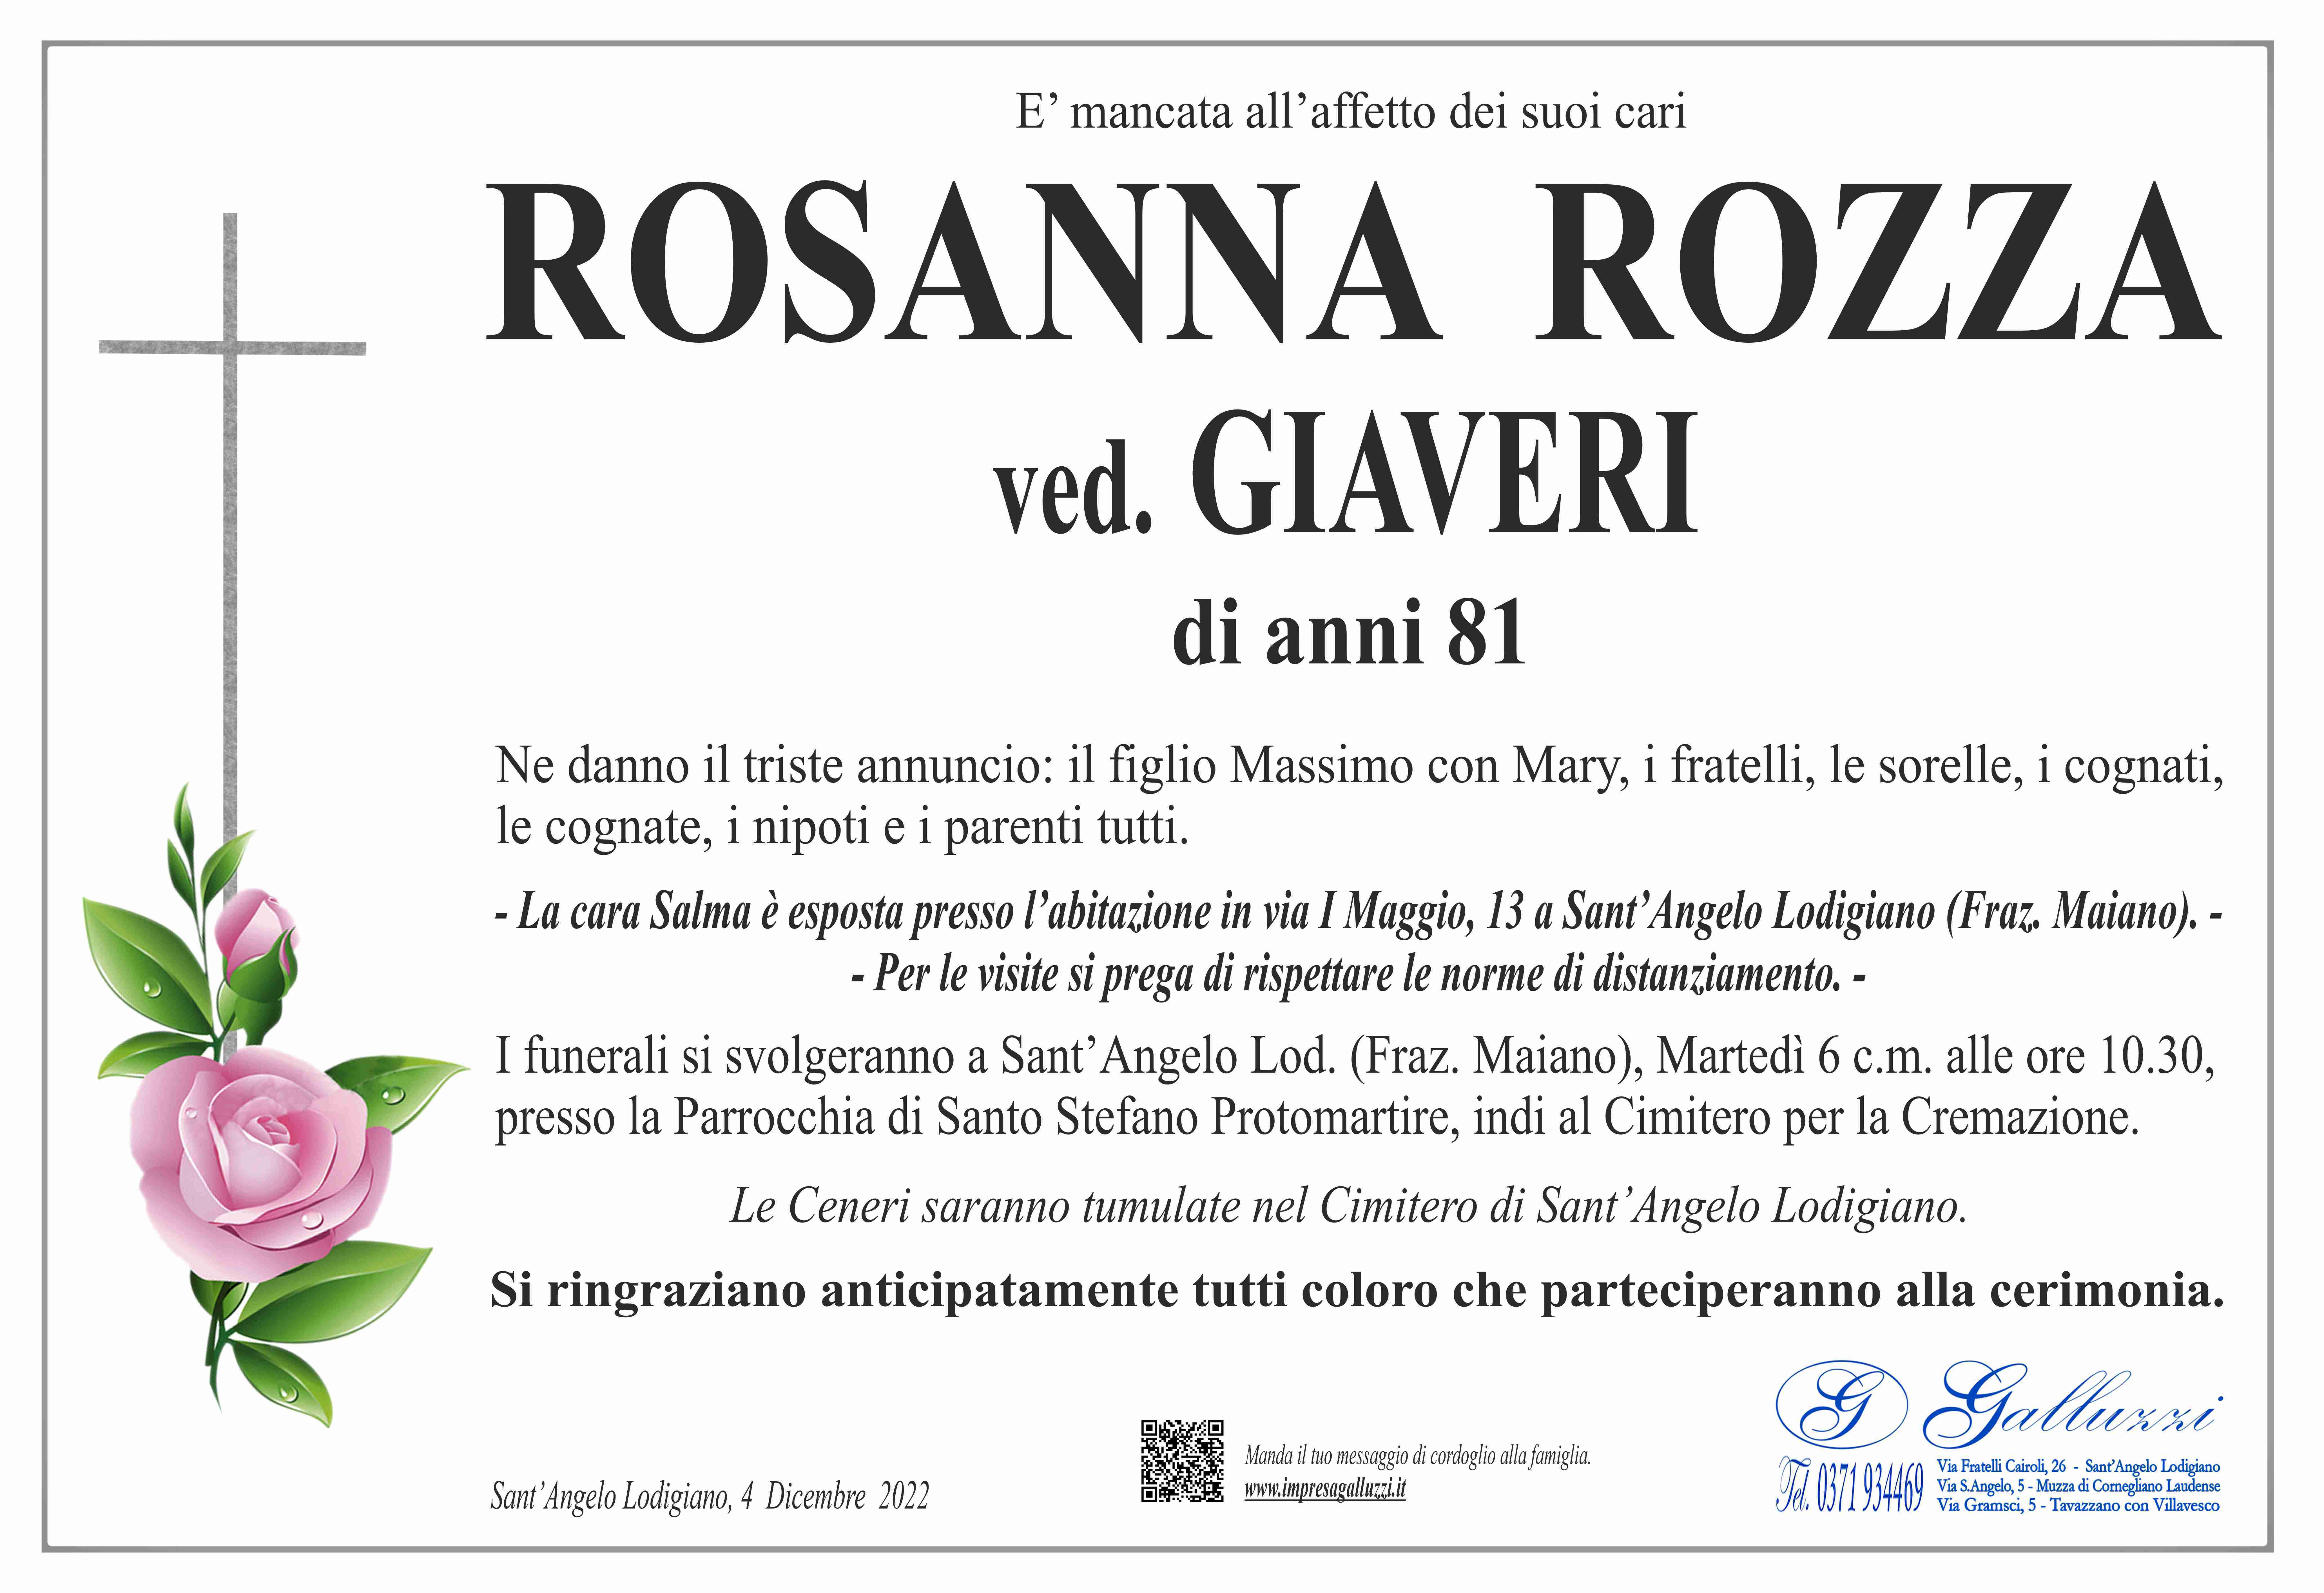 Rosanna Rozza